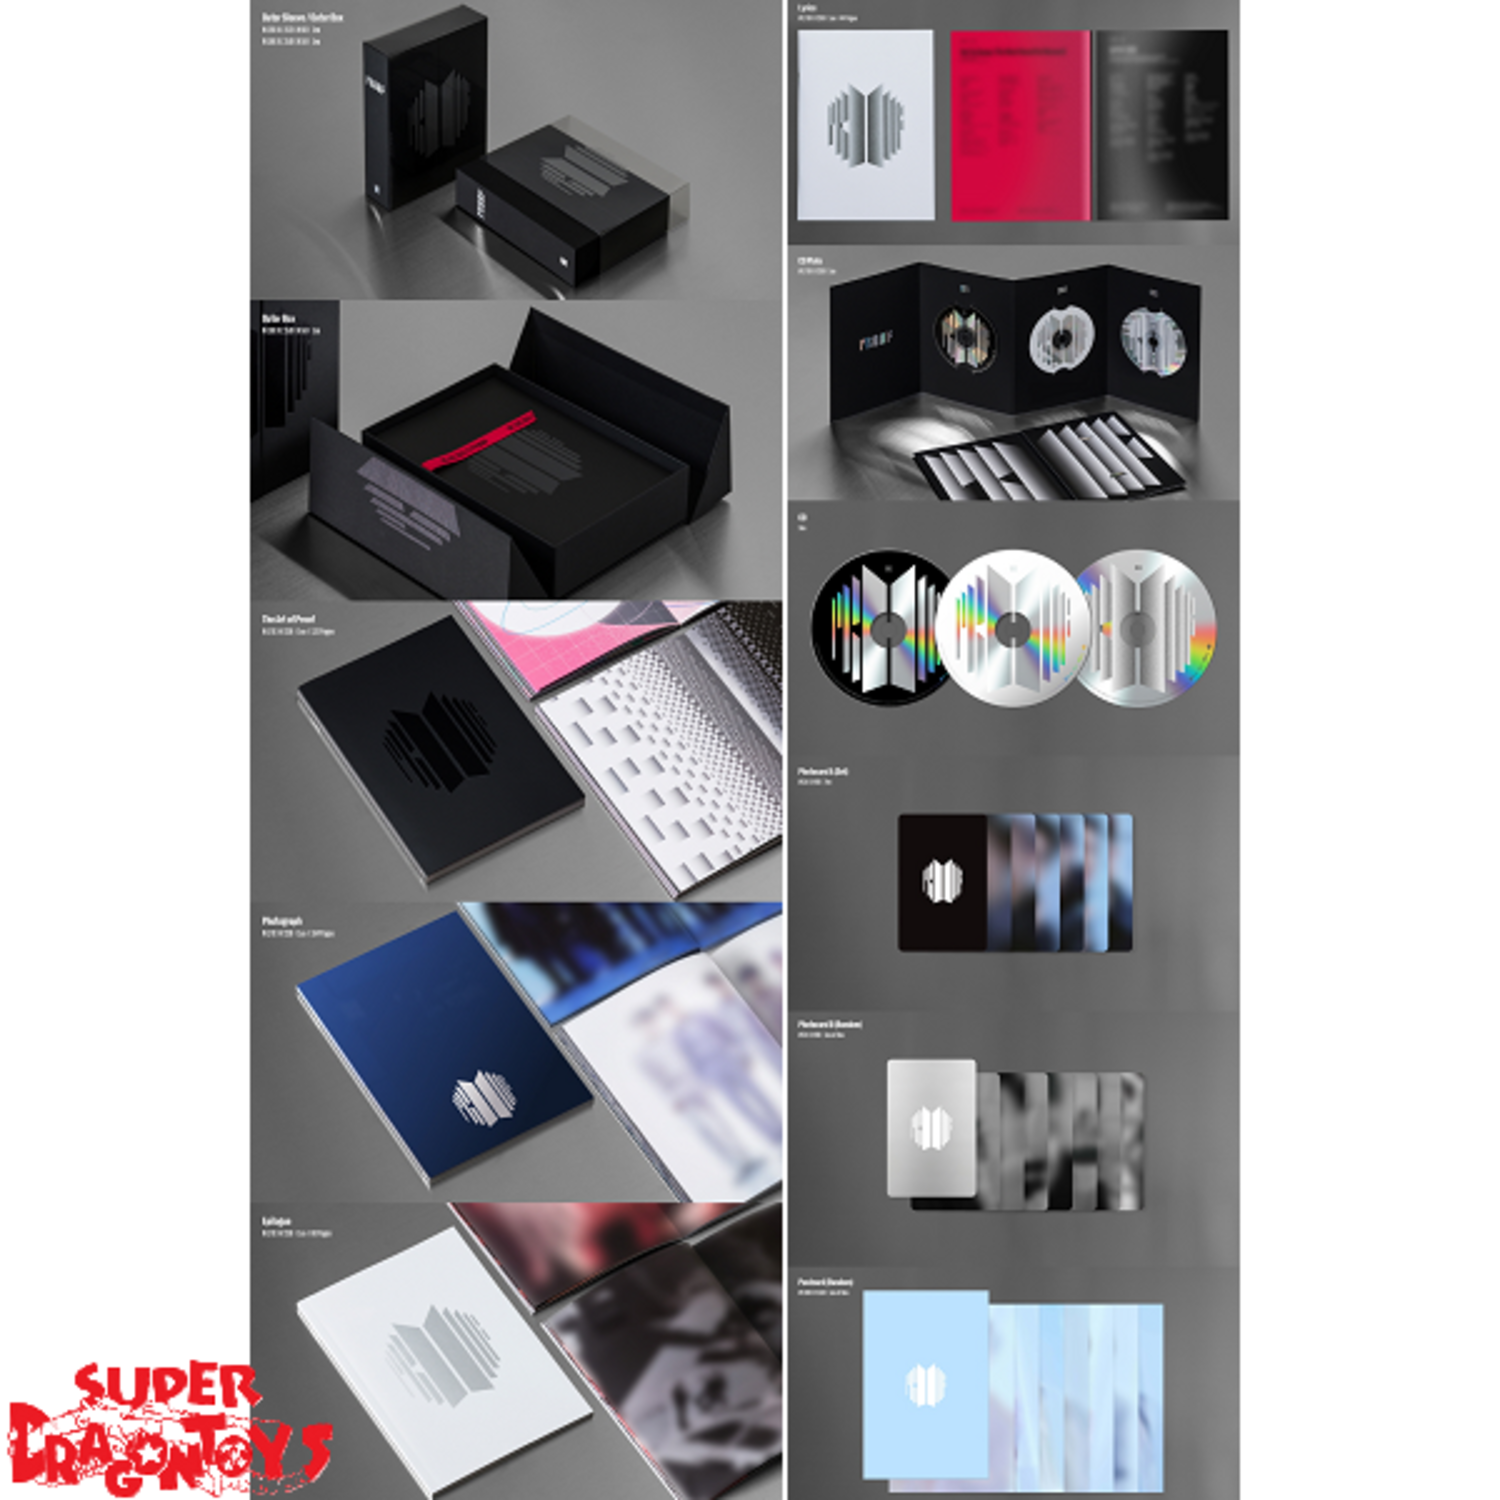 BTS アルバム Proof Standard Edition 未使用3種-PhotocardA